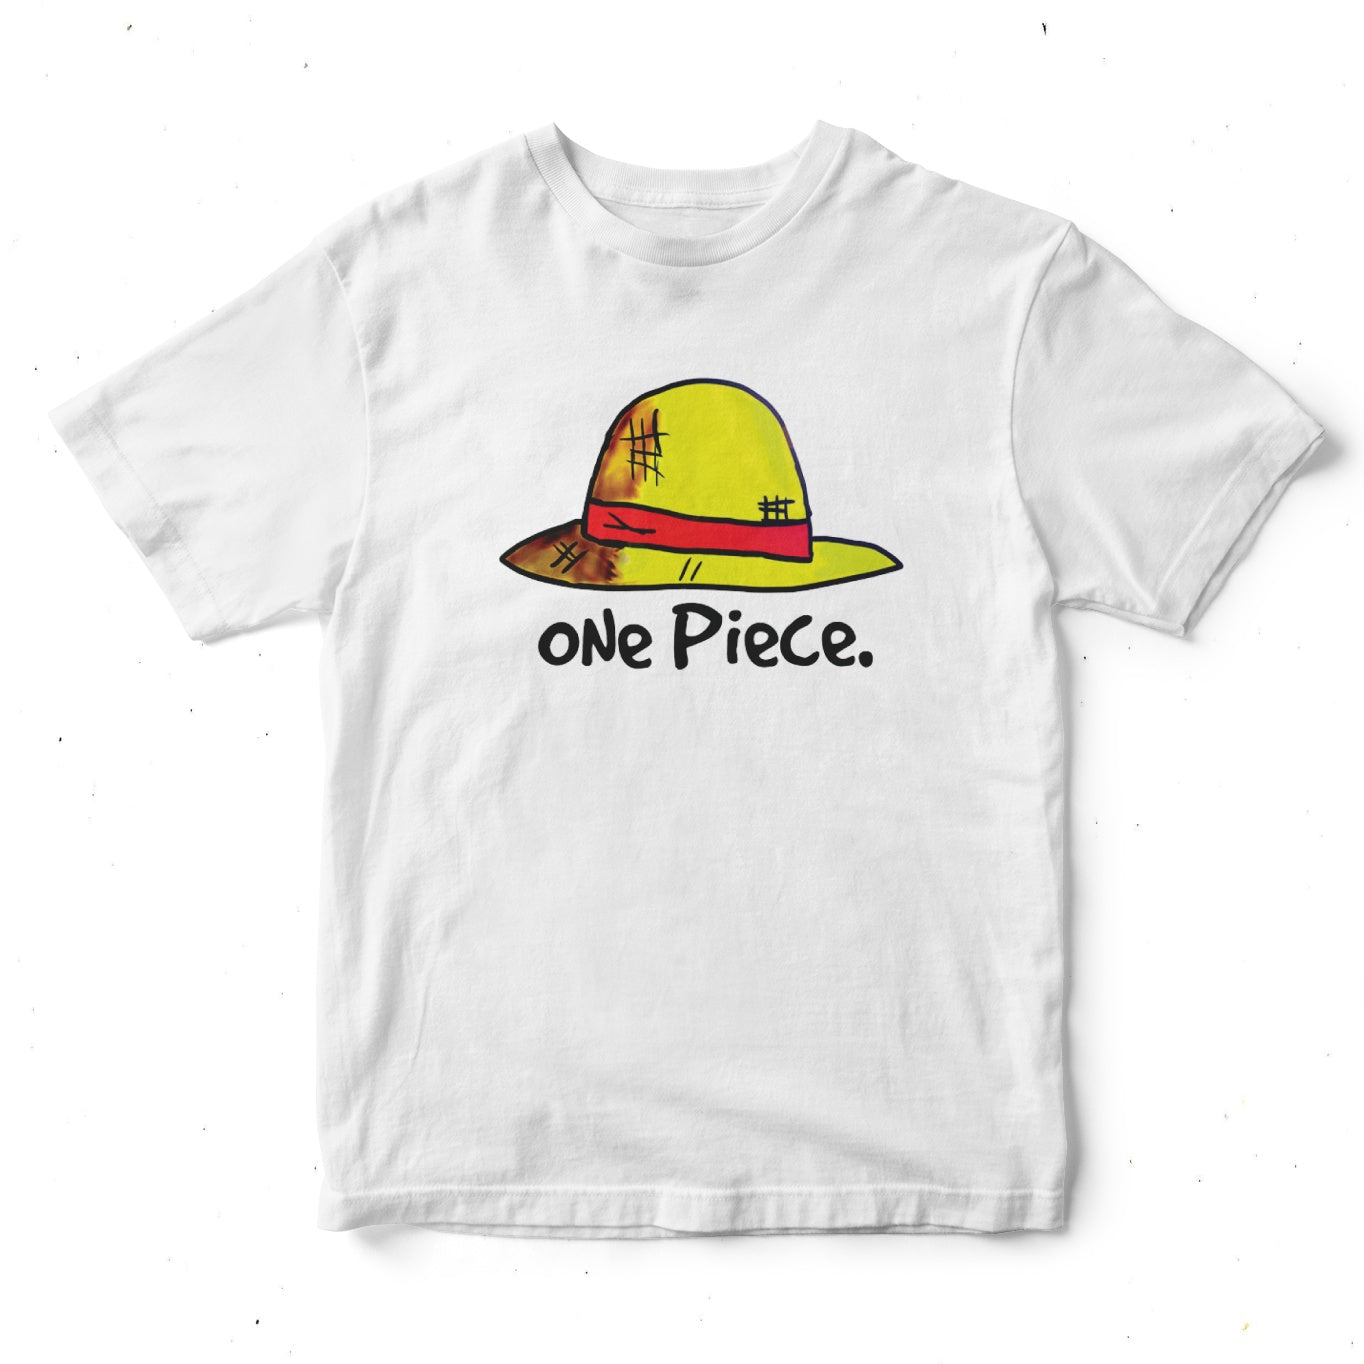 one piece t shirt